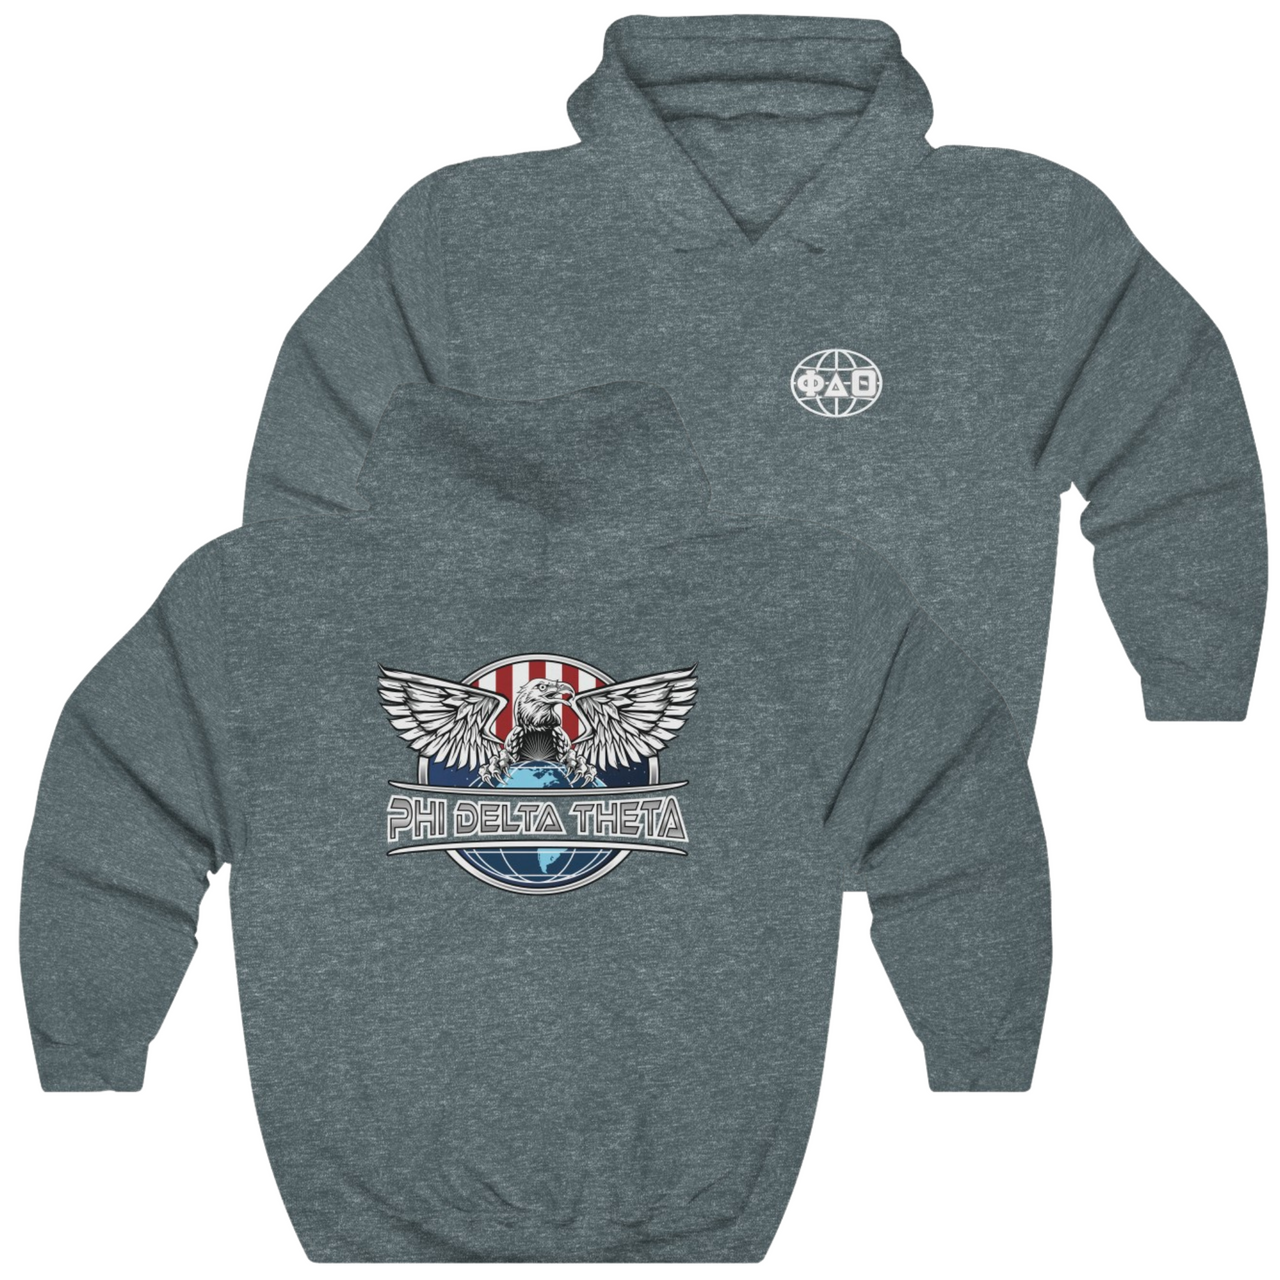 Grey Phi Delta Theta Graphic Hoodie | The Fraternal Order | phi delta theta fraternity greek apparel 